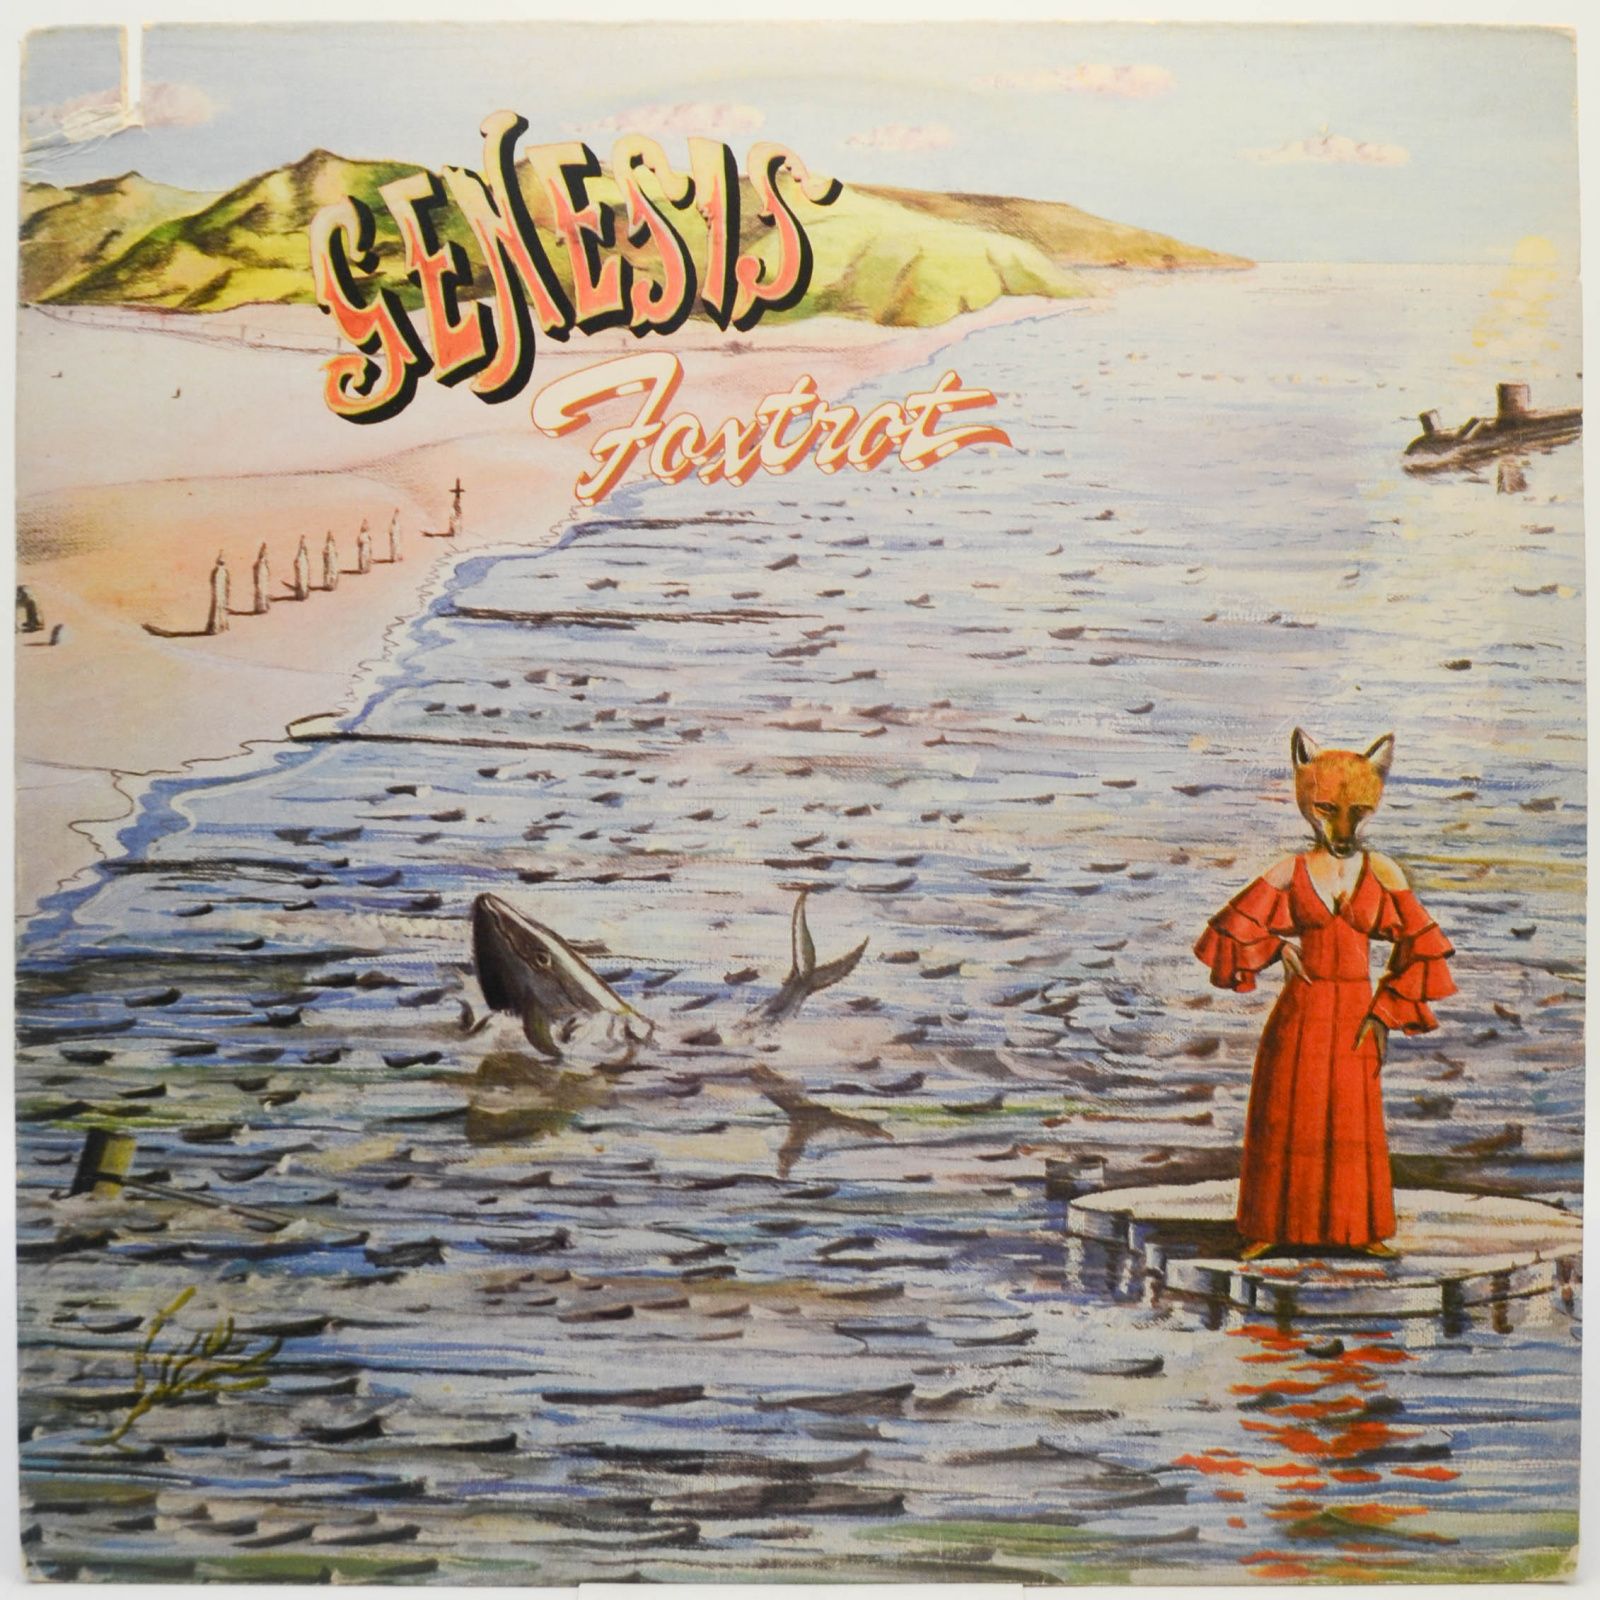 Genesis — Foxtrot (USA), 1976